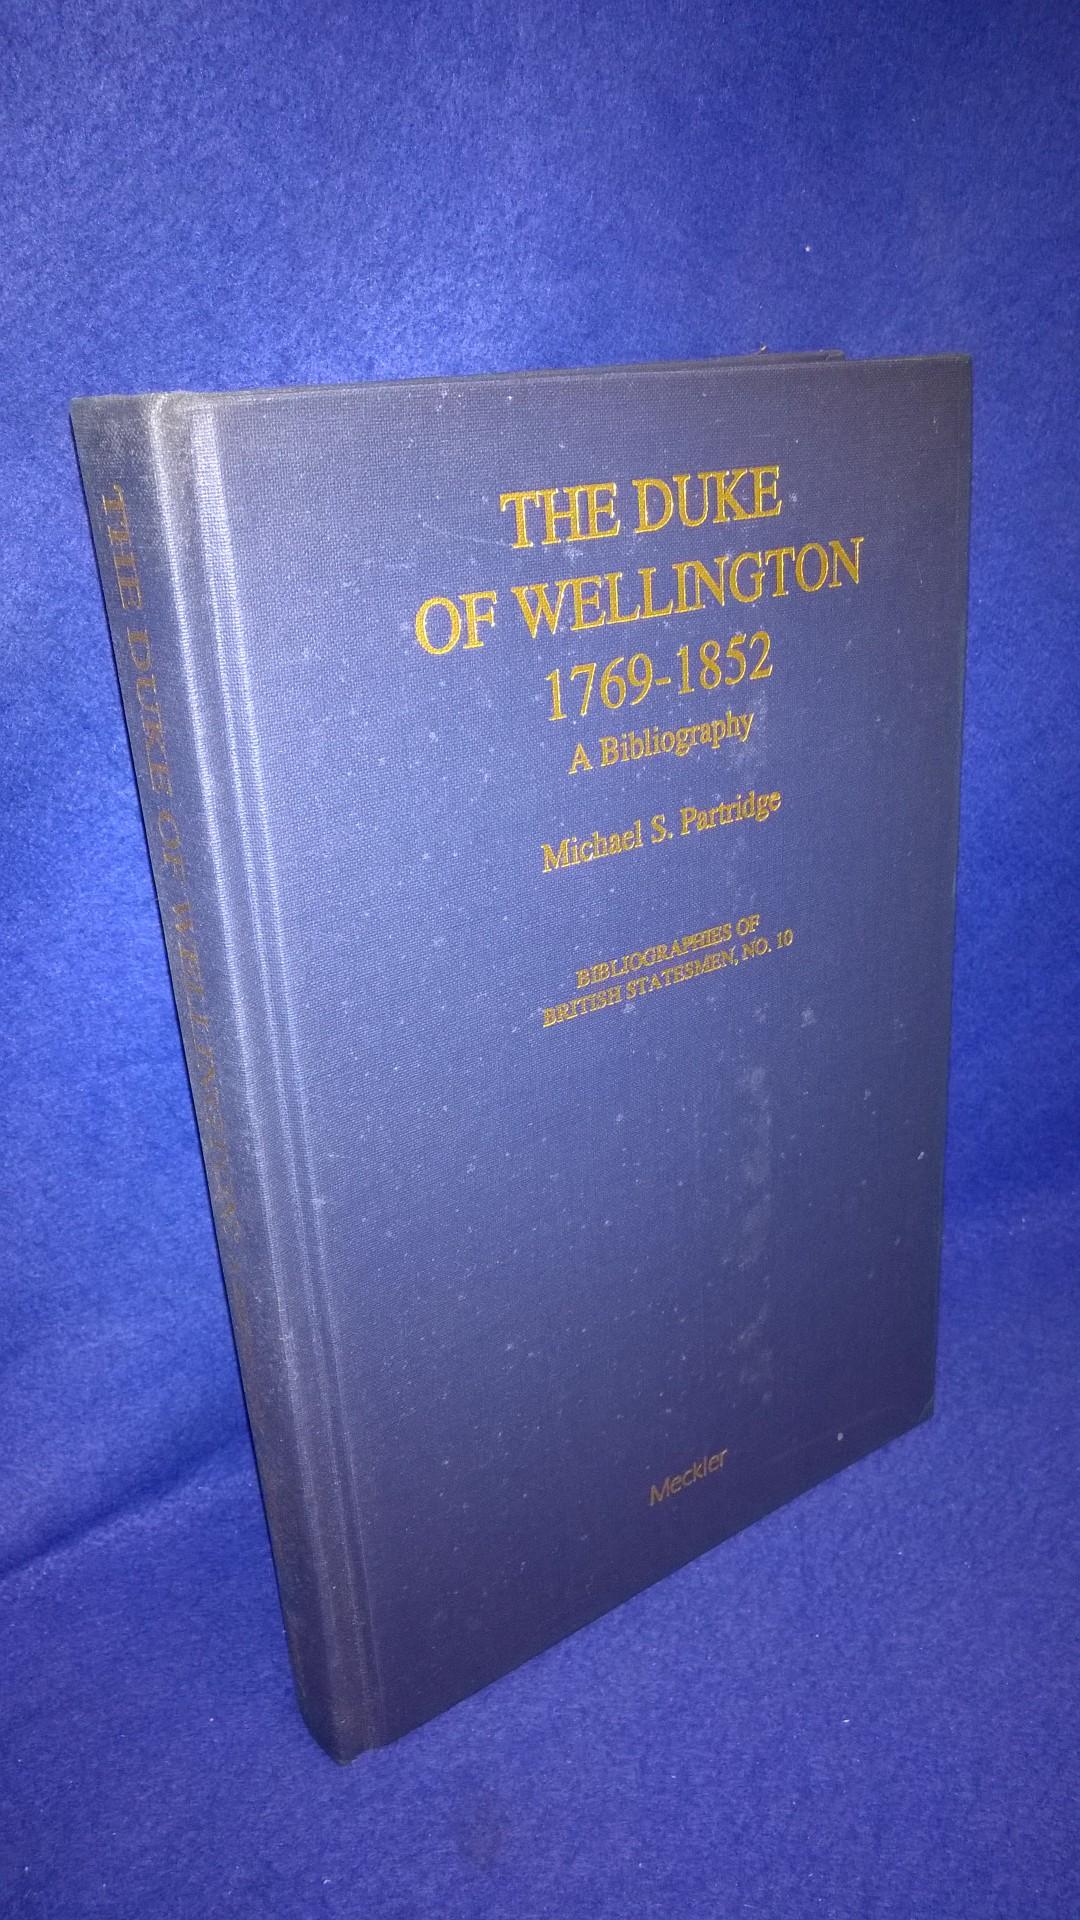 The Duke of Wellington 1769-1852: A Bibliography.